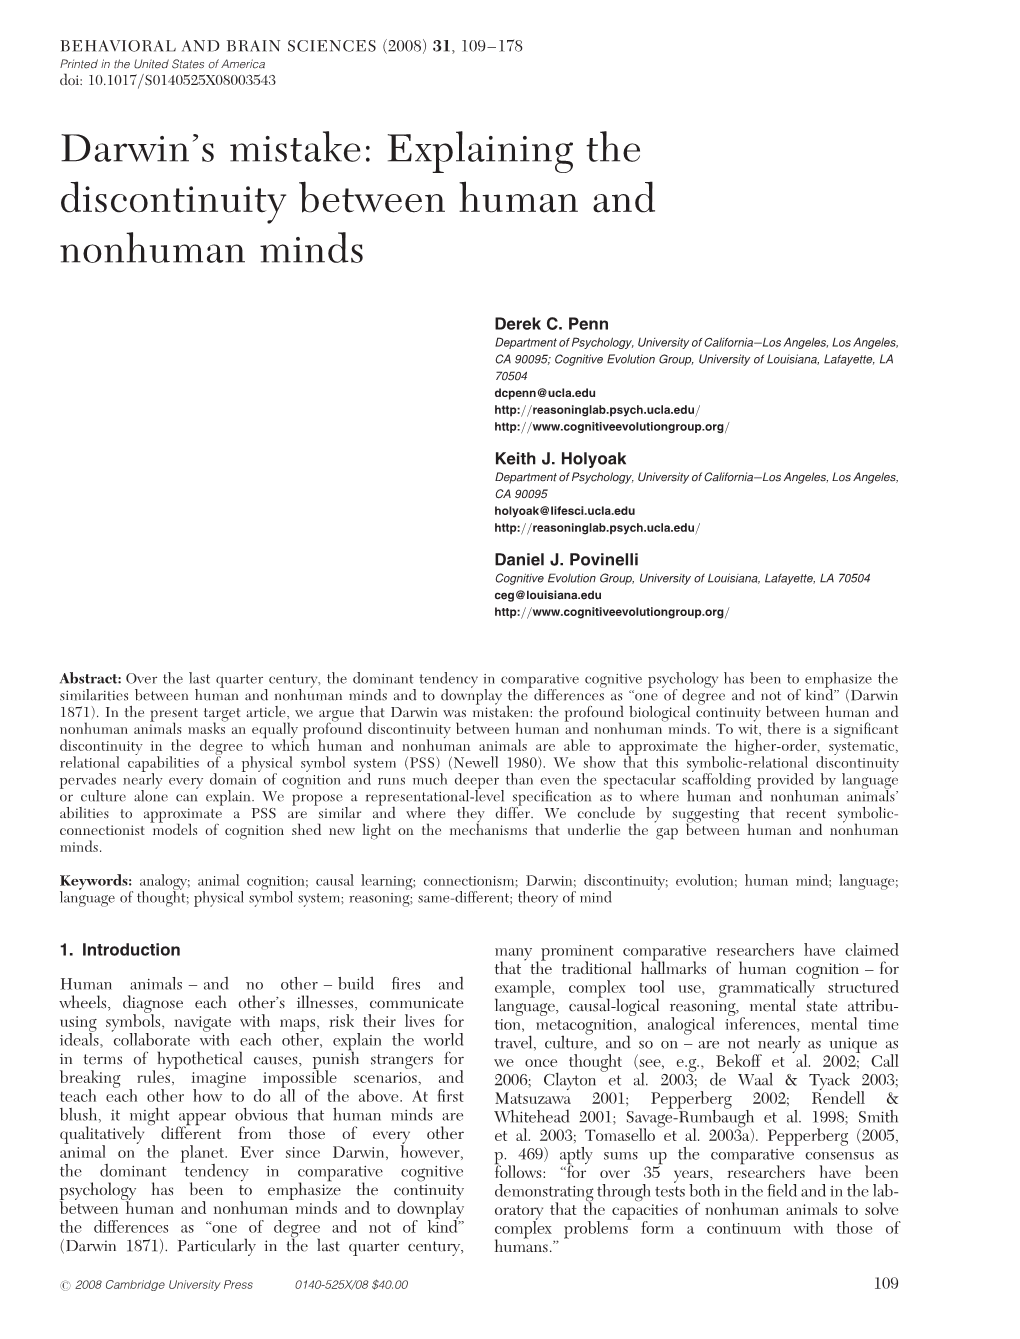 Explaining the Discontinuity Between Human and Nonhuman Minds